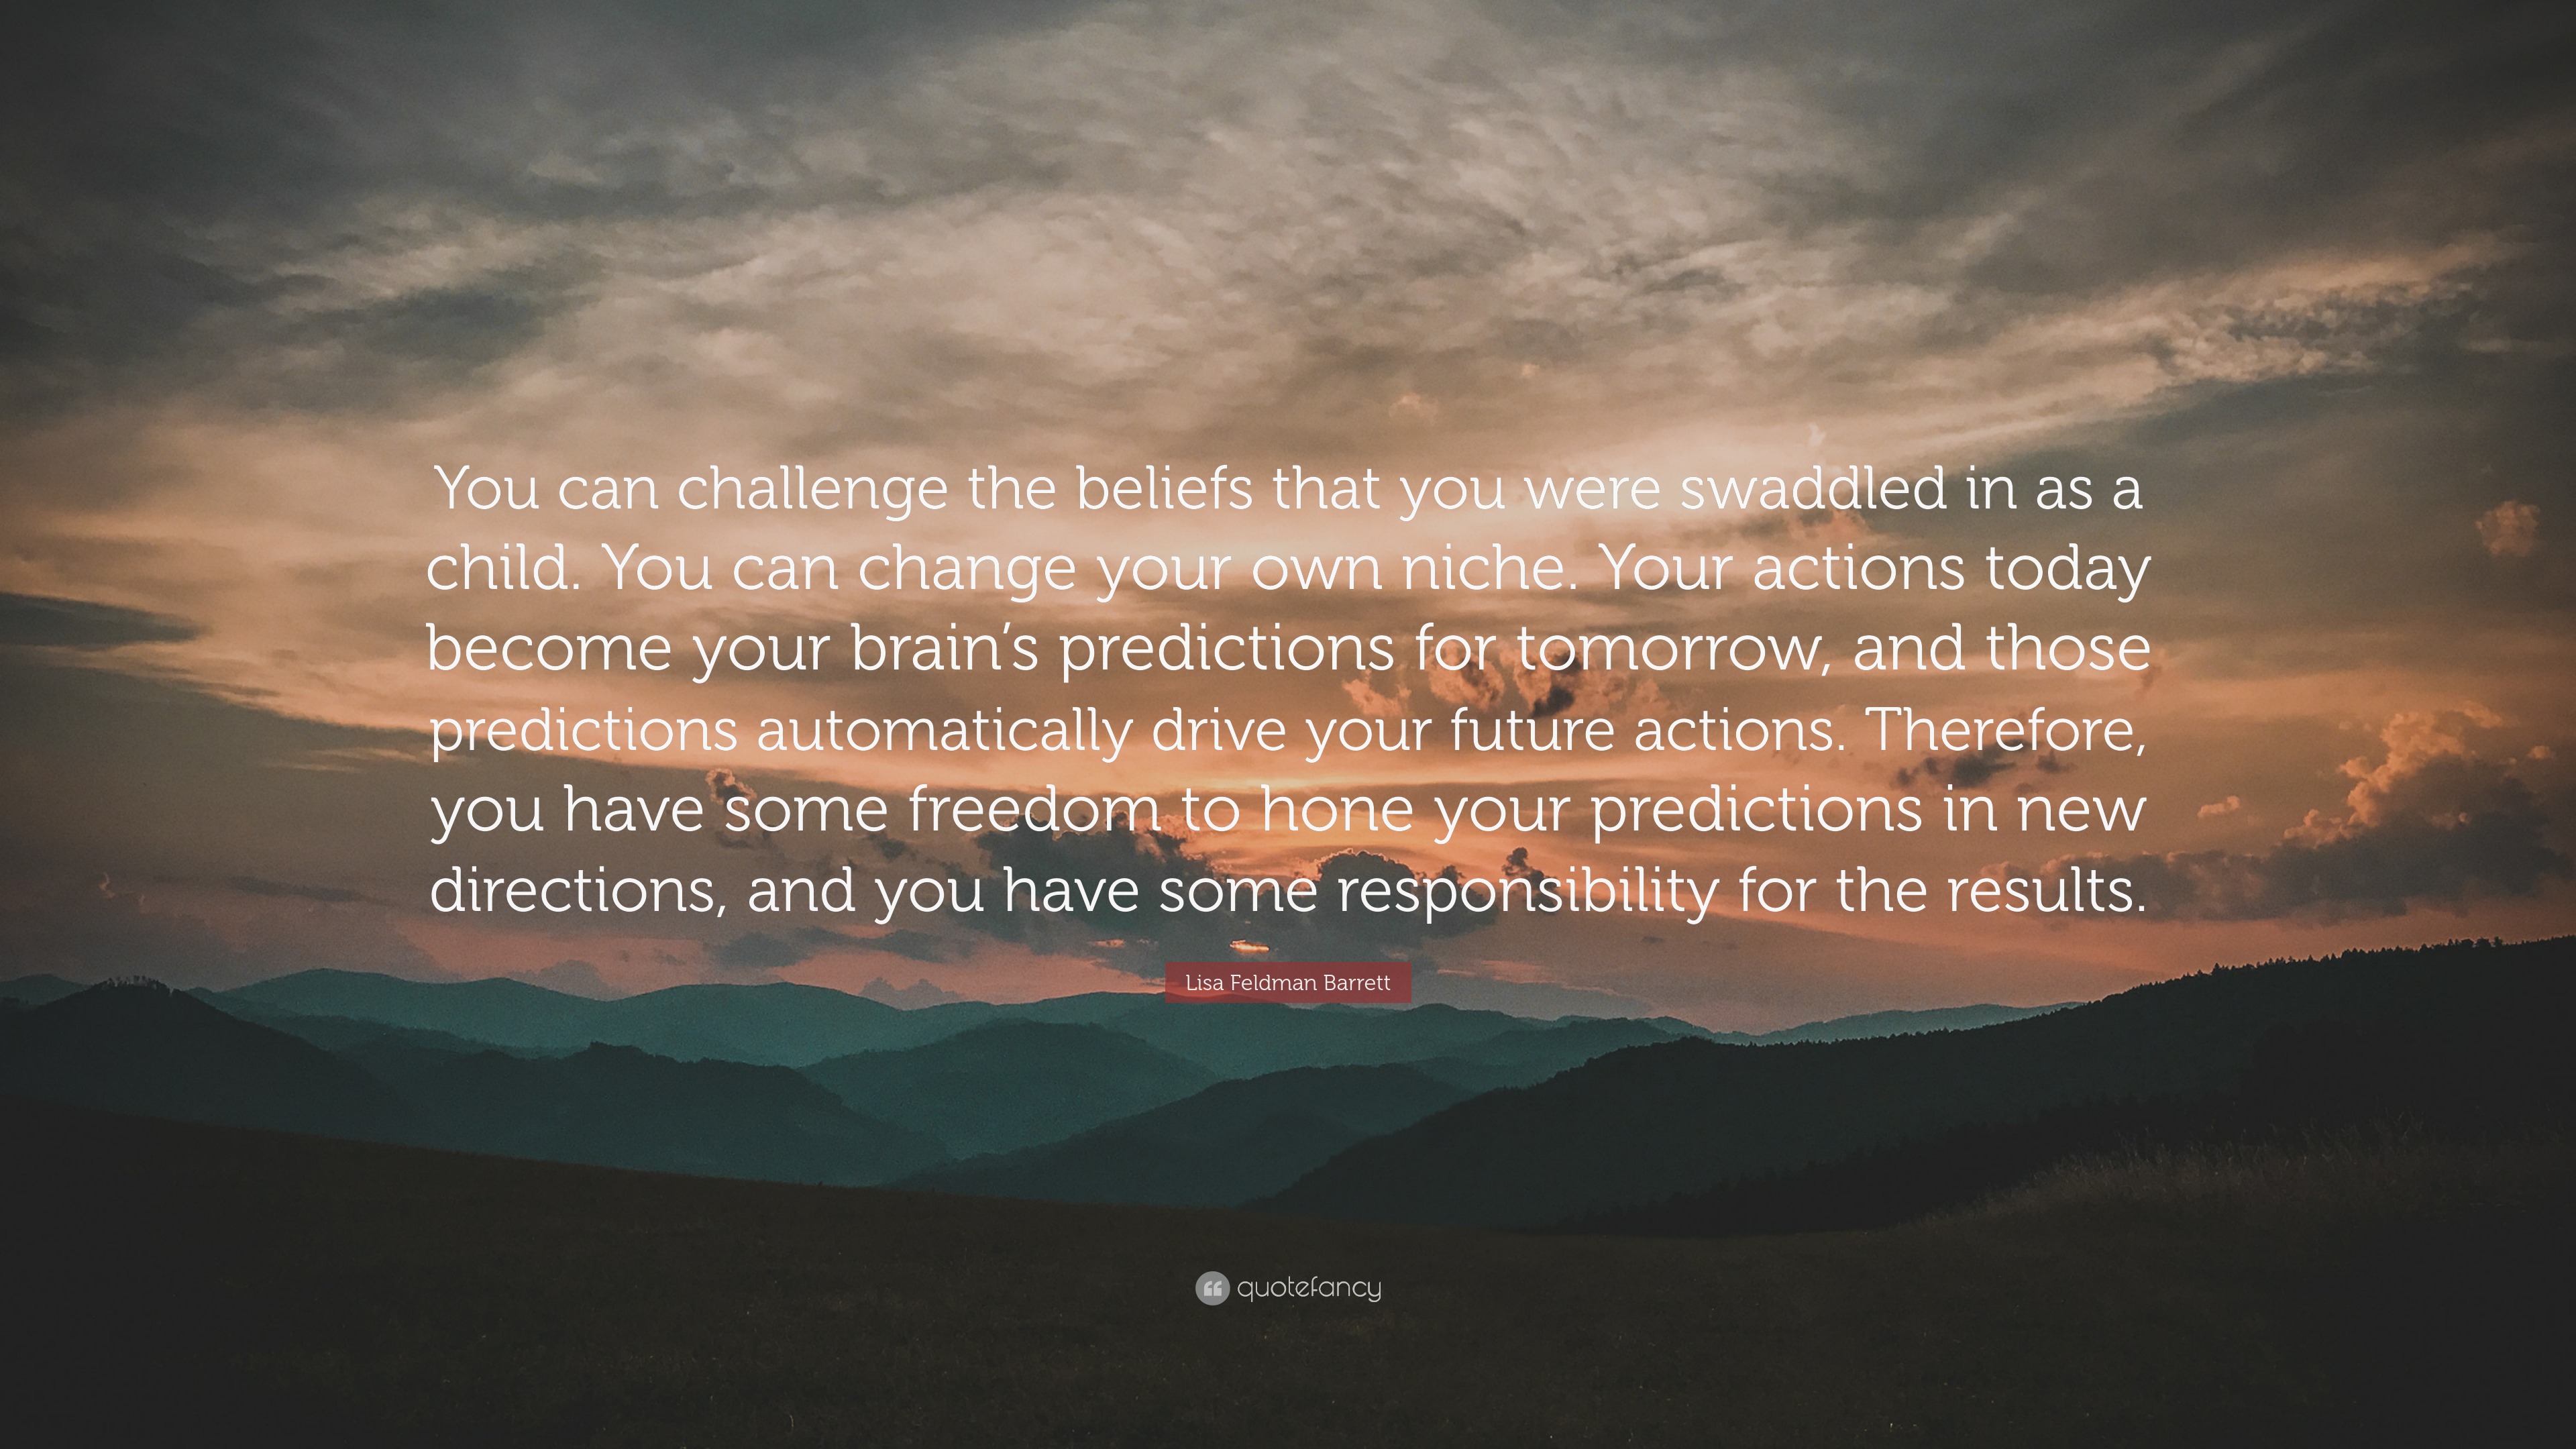 Lisa Feldman Barrett Quote: “You can challenge the beliefs that you ...